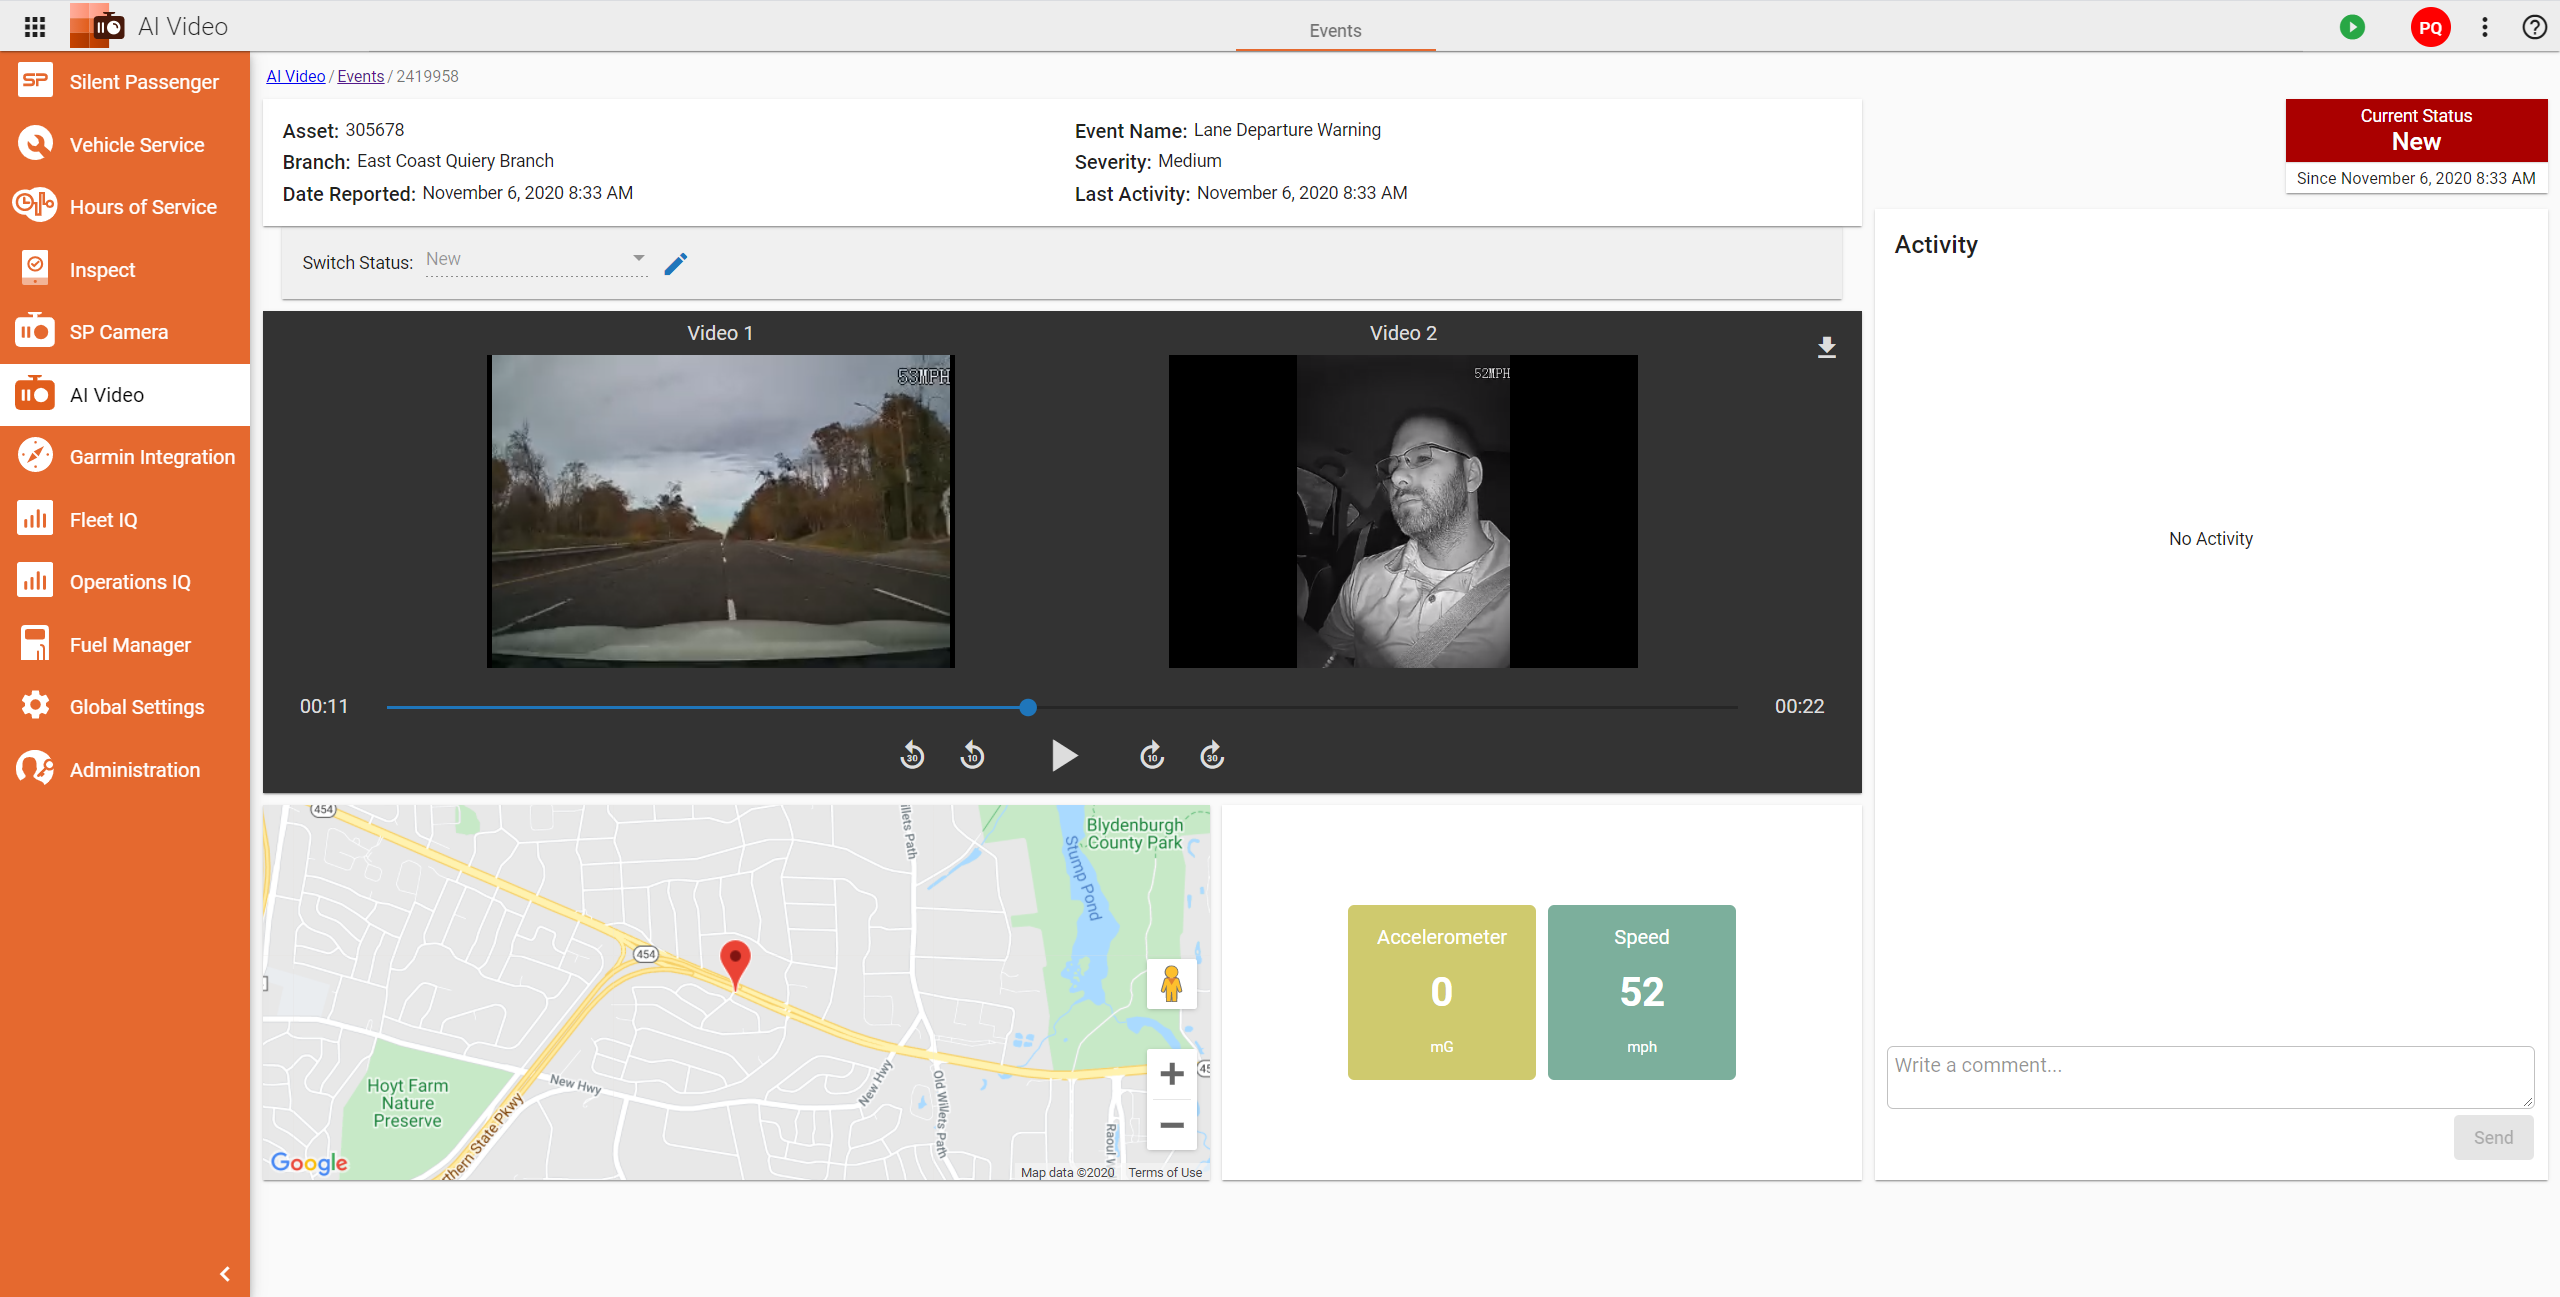 IntelliShift Software - Distracted Driving warning using AI Video